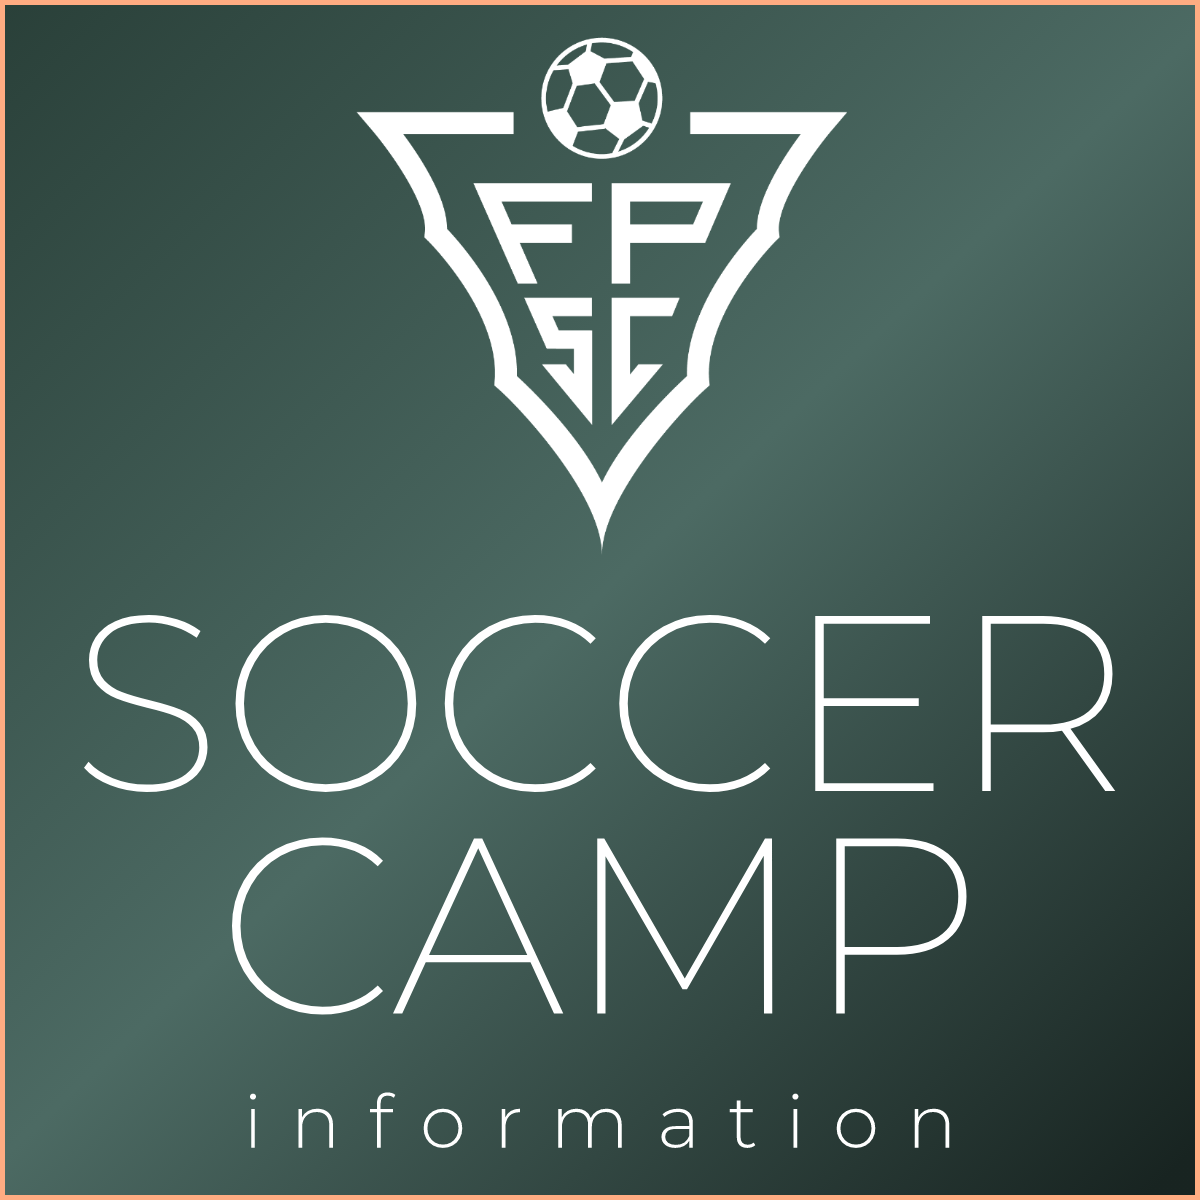 Click for Soccer Camp Information